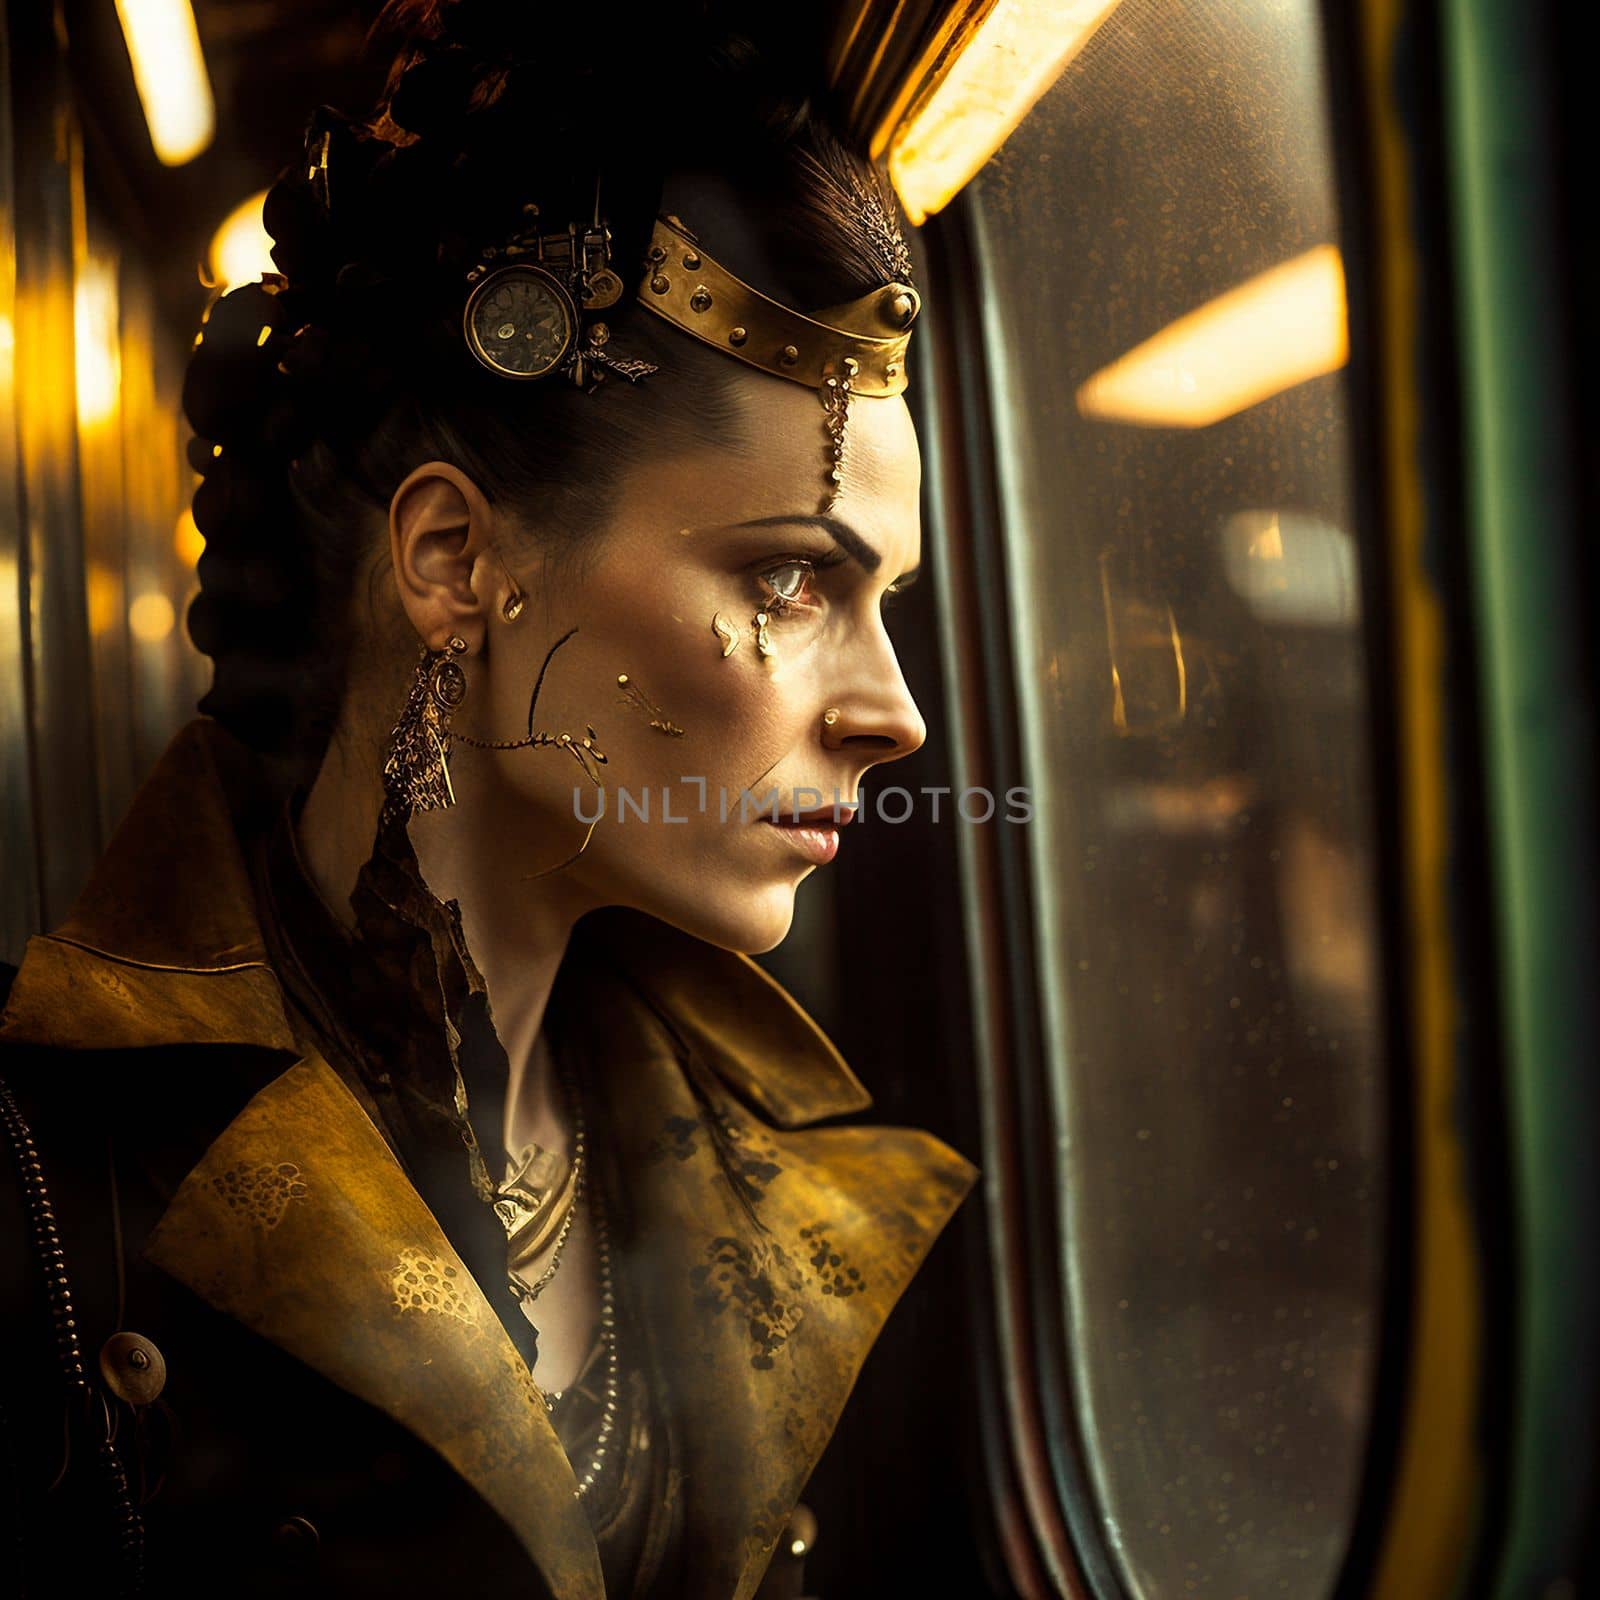 The woman is on the train. Cyberpunk art by NeuroSky